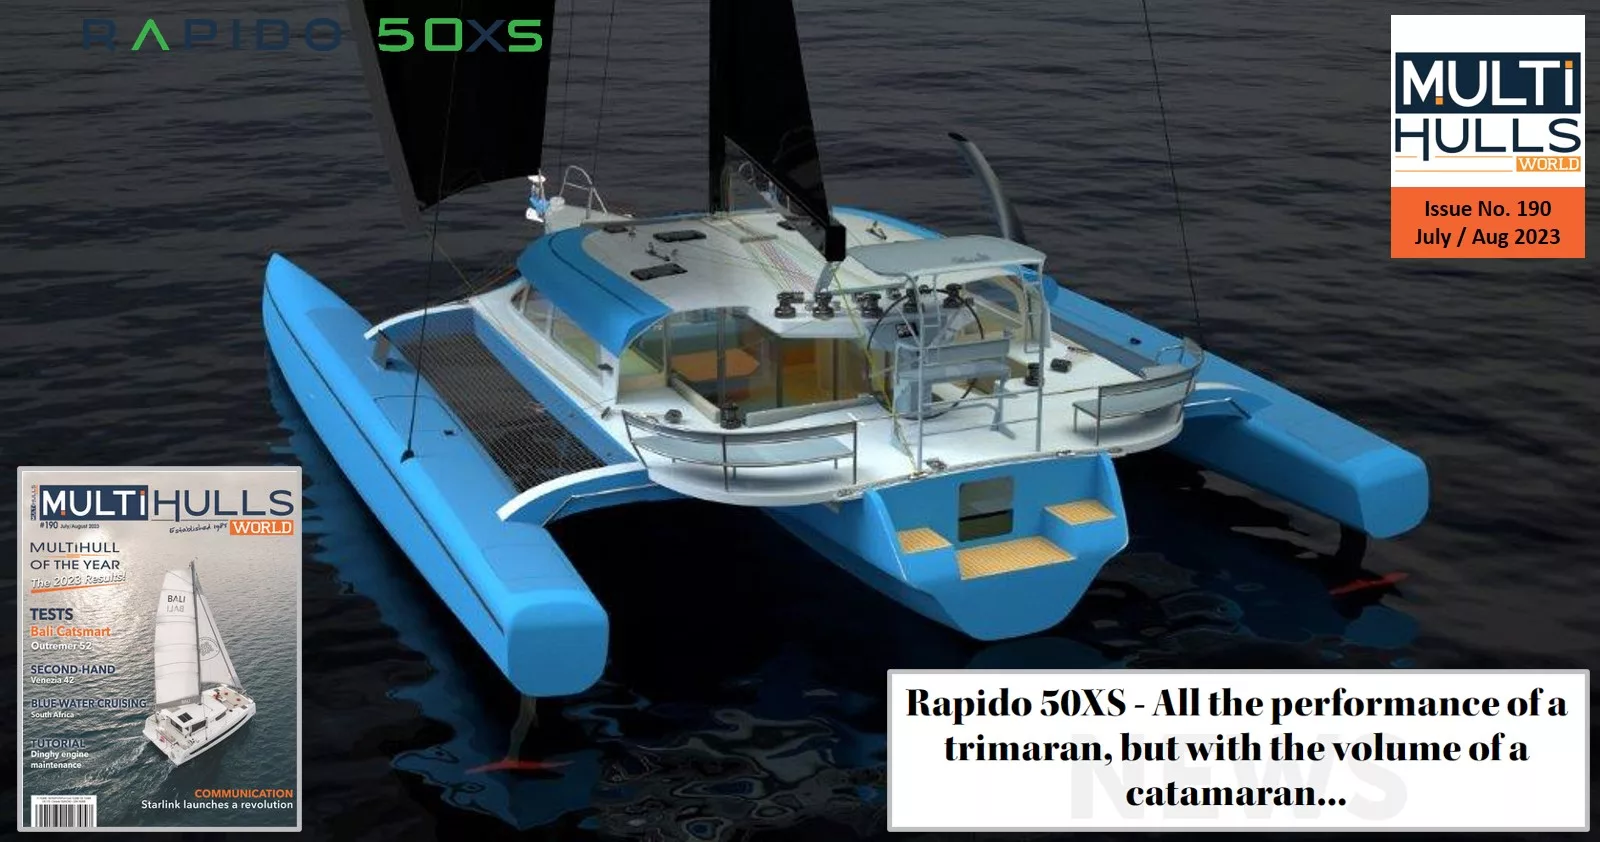 Rapido 50XS, Multihulls World